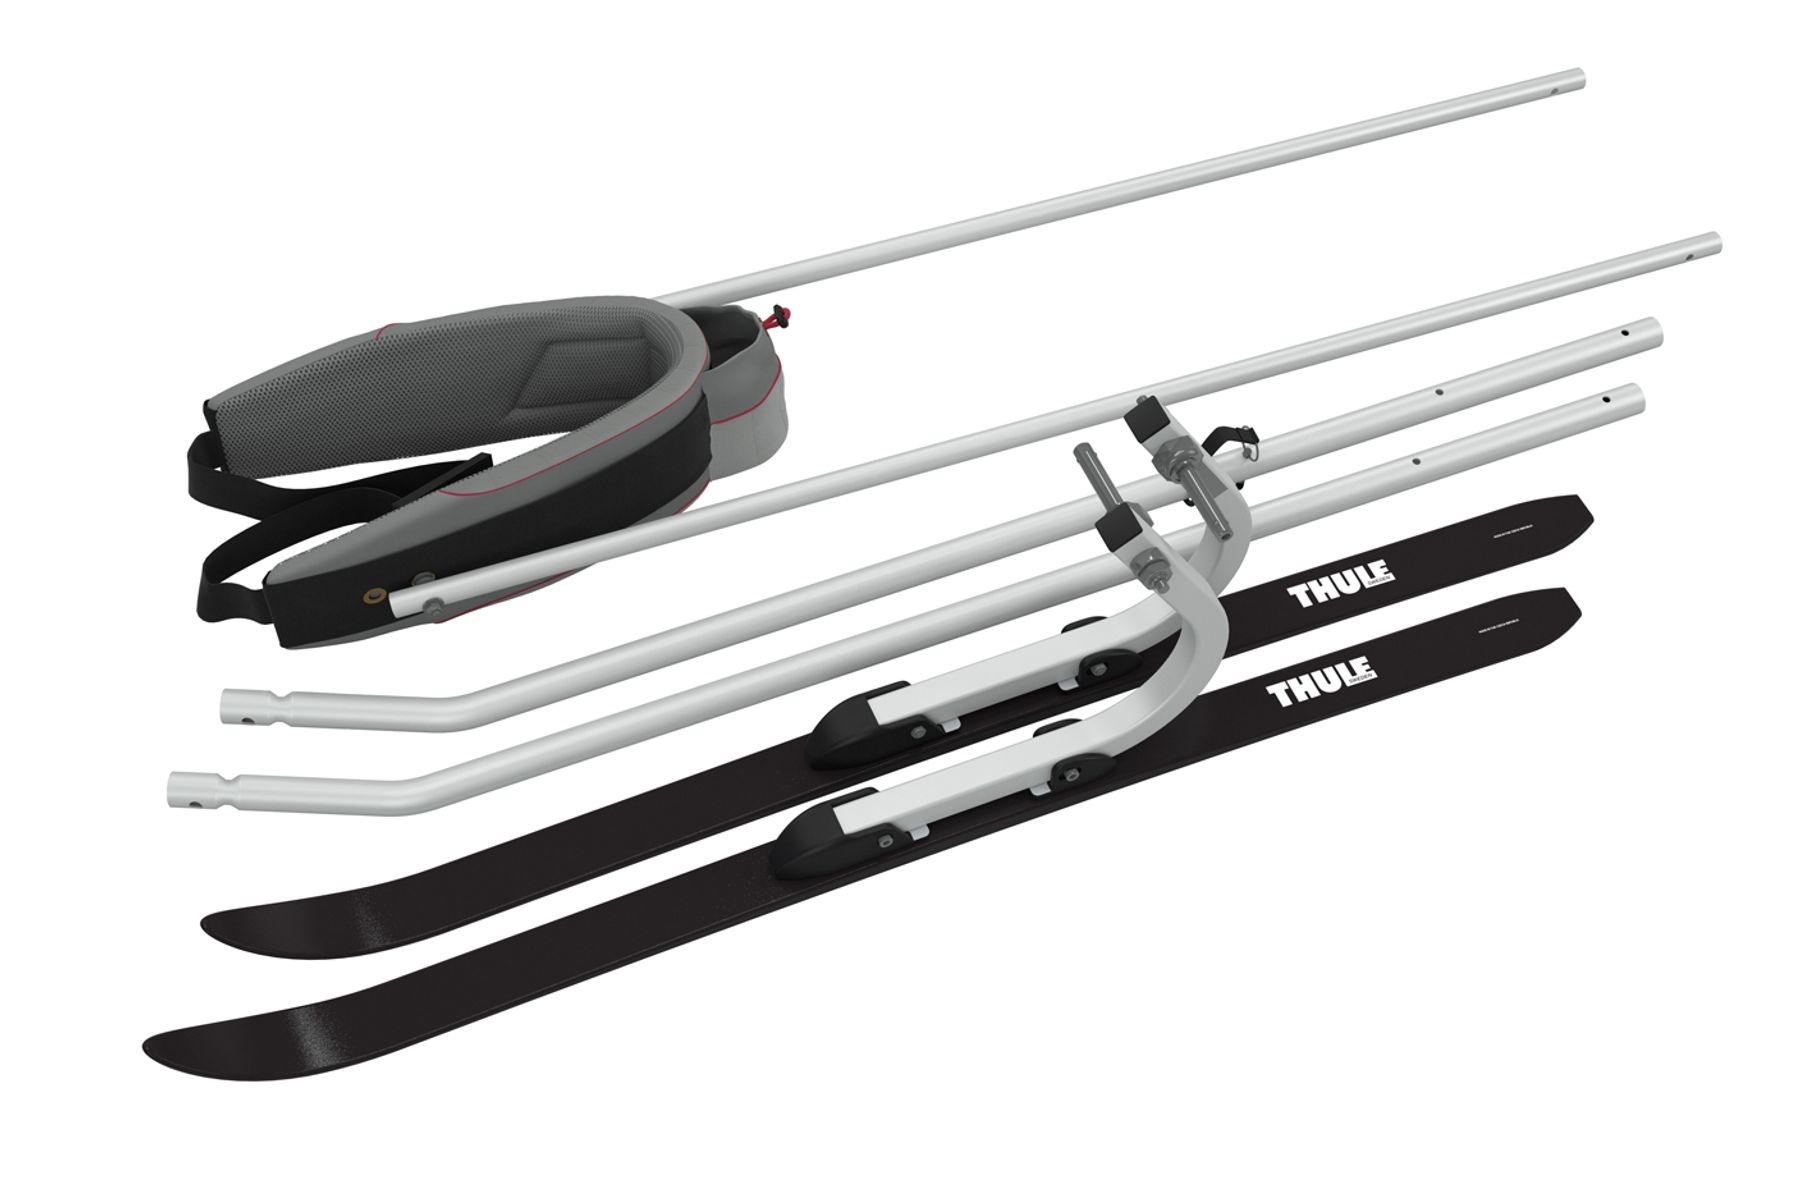 tiran Knooppunt Bloemlezing Thule Chariot Cross-Country Skiing Kit | Thule | United States